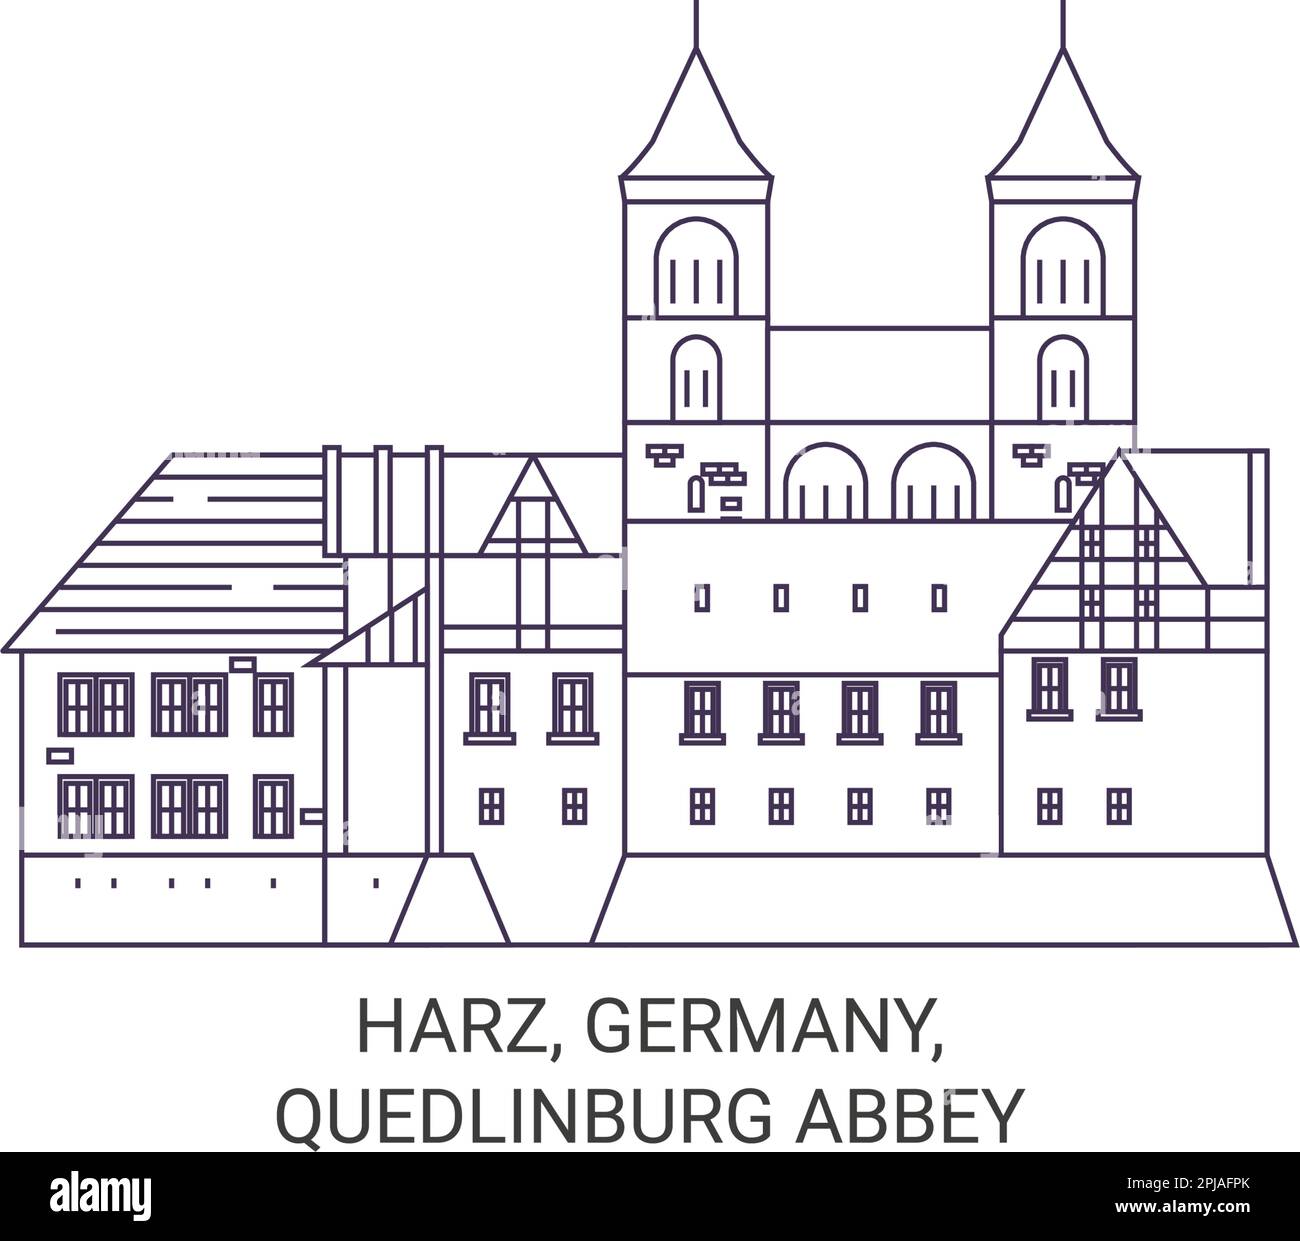 Germany, Harz, Quedlinburg Abbey travel landmark vector illustration Stock Vector